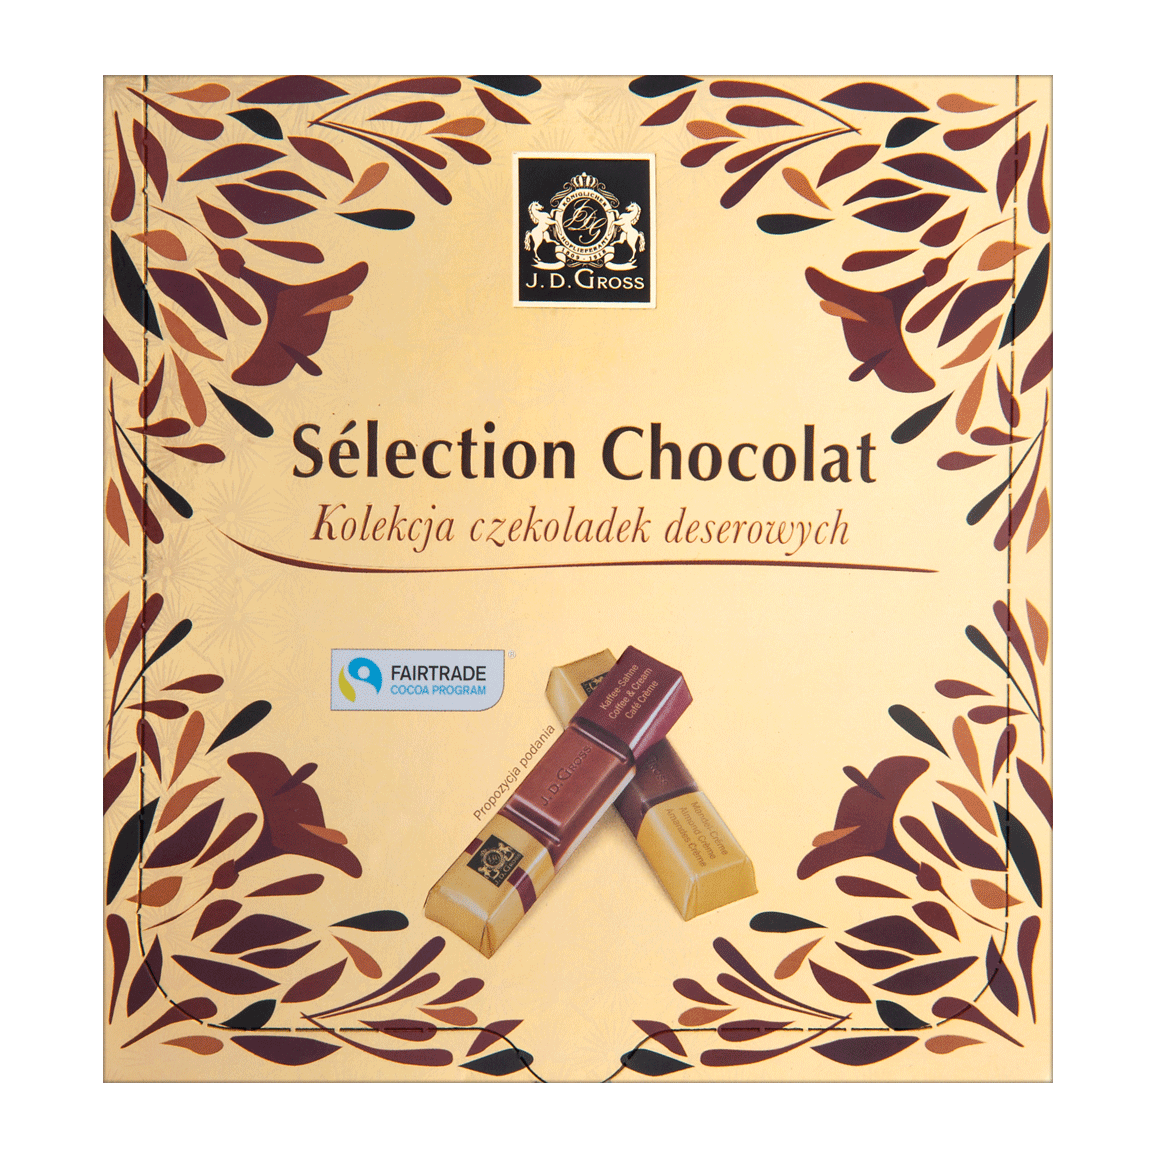 J.D. Gross Kolekcja czekoladek deserowych